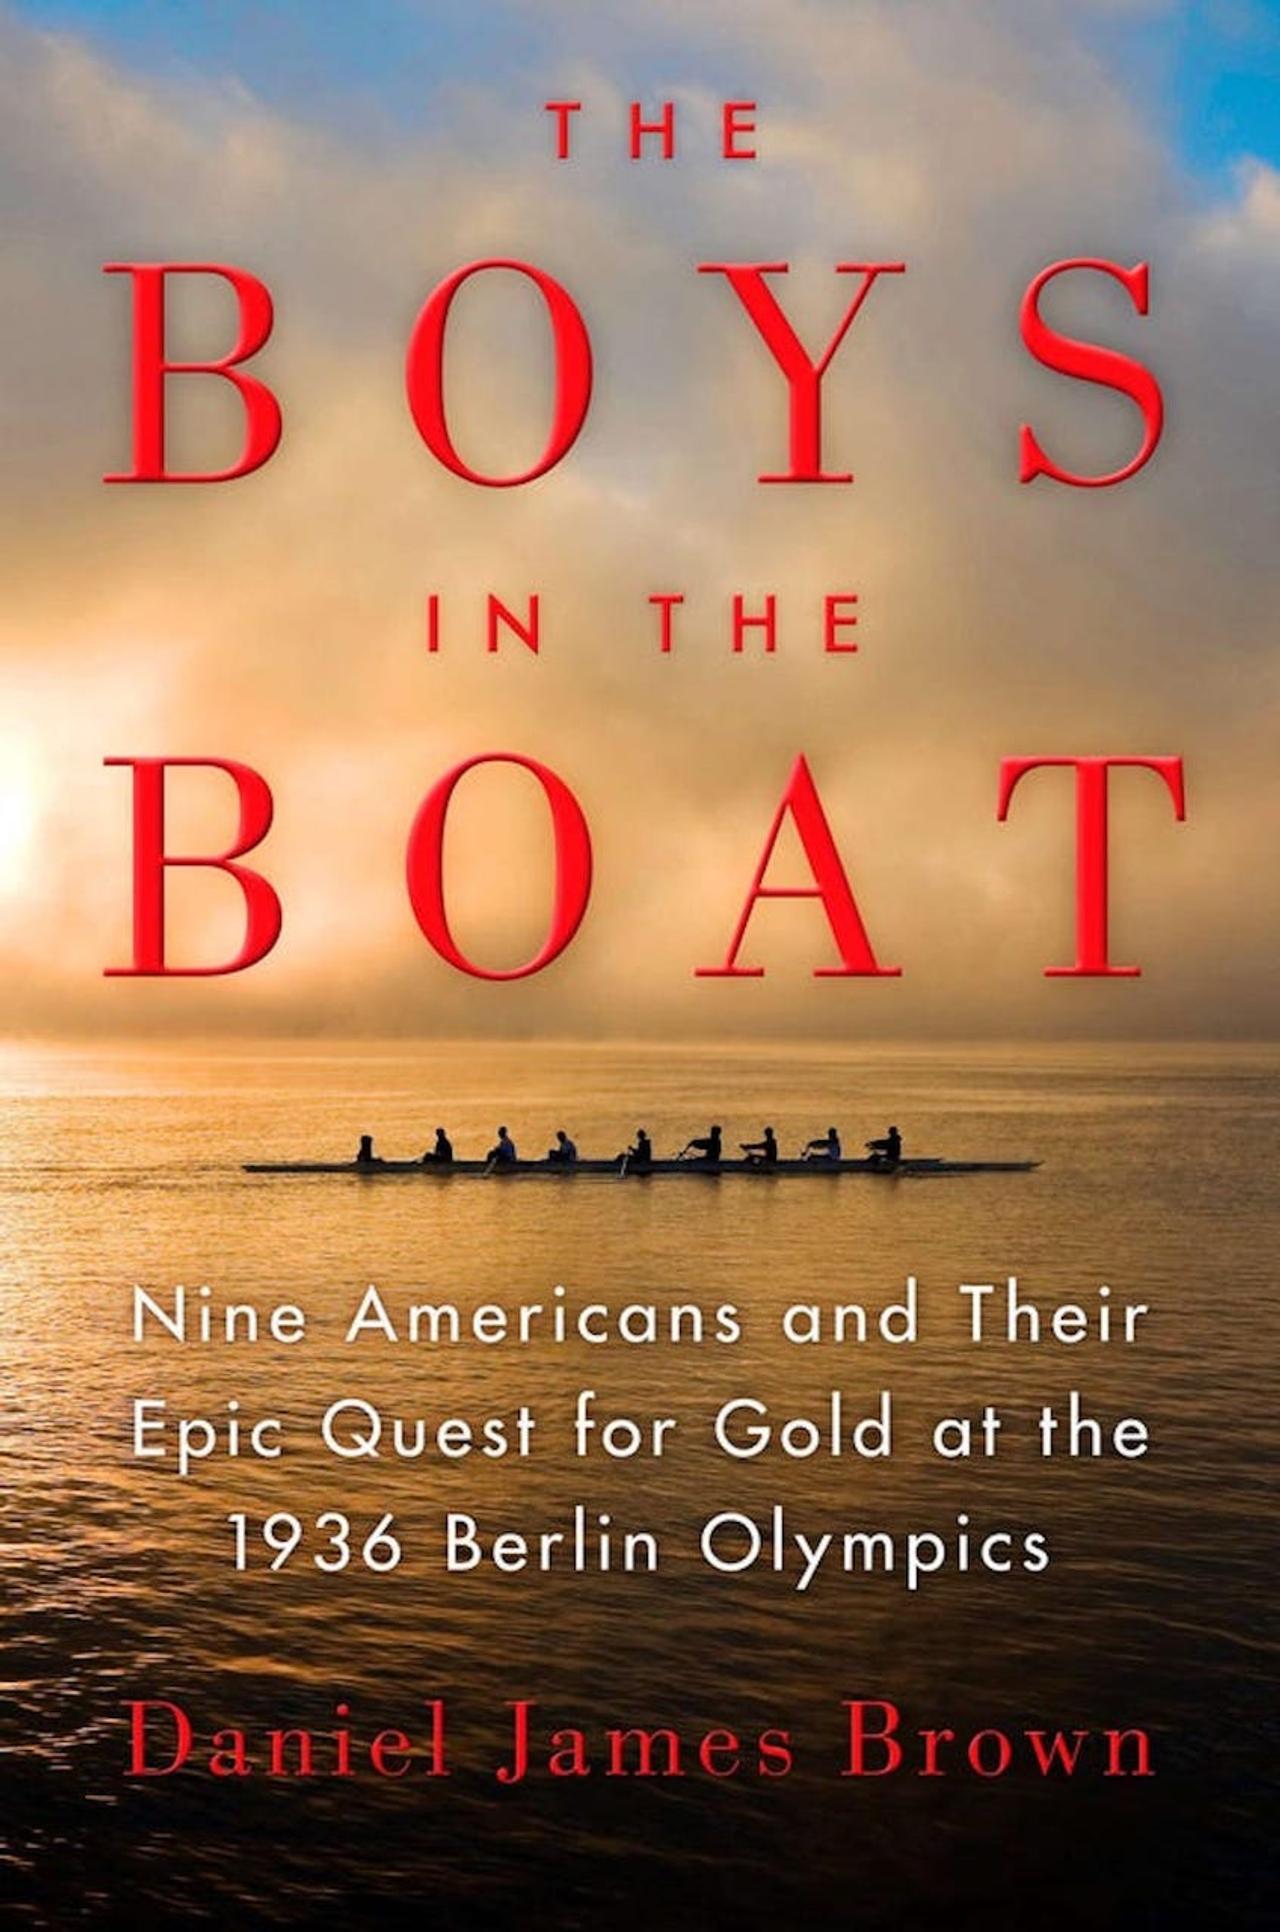 Daniel James Brown, The Boys in the Boat